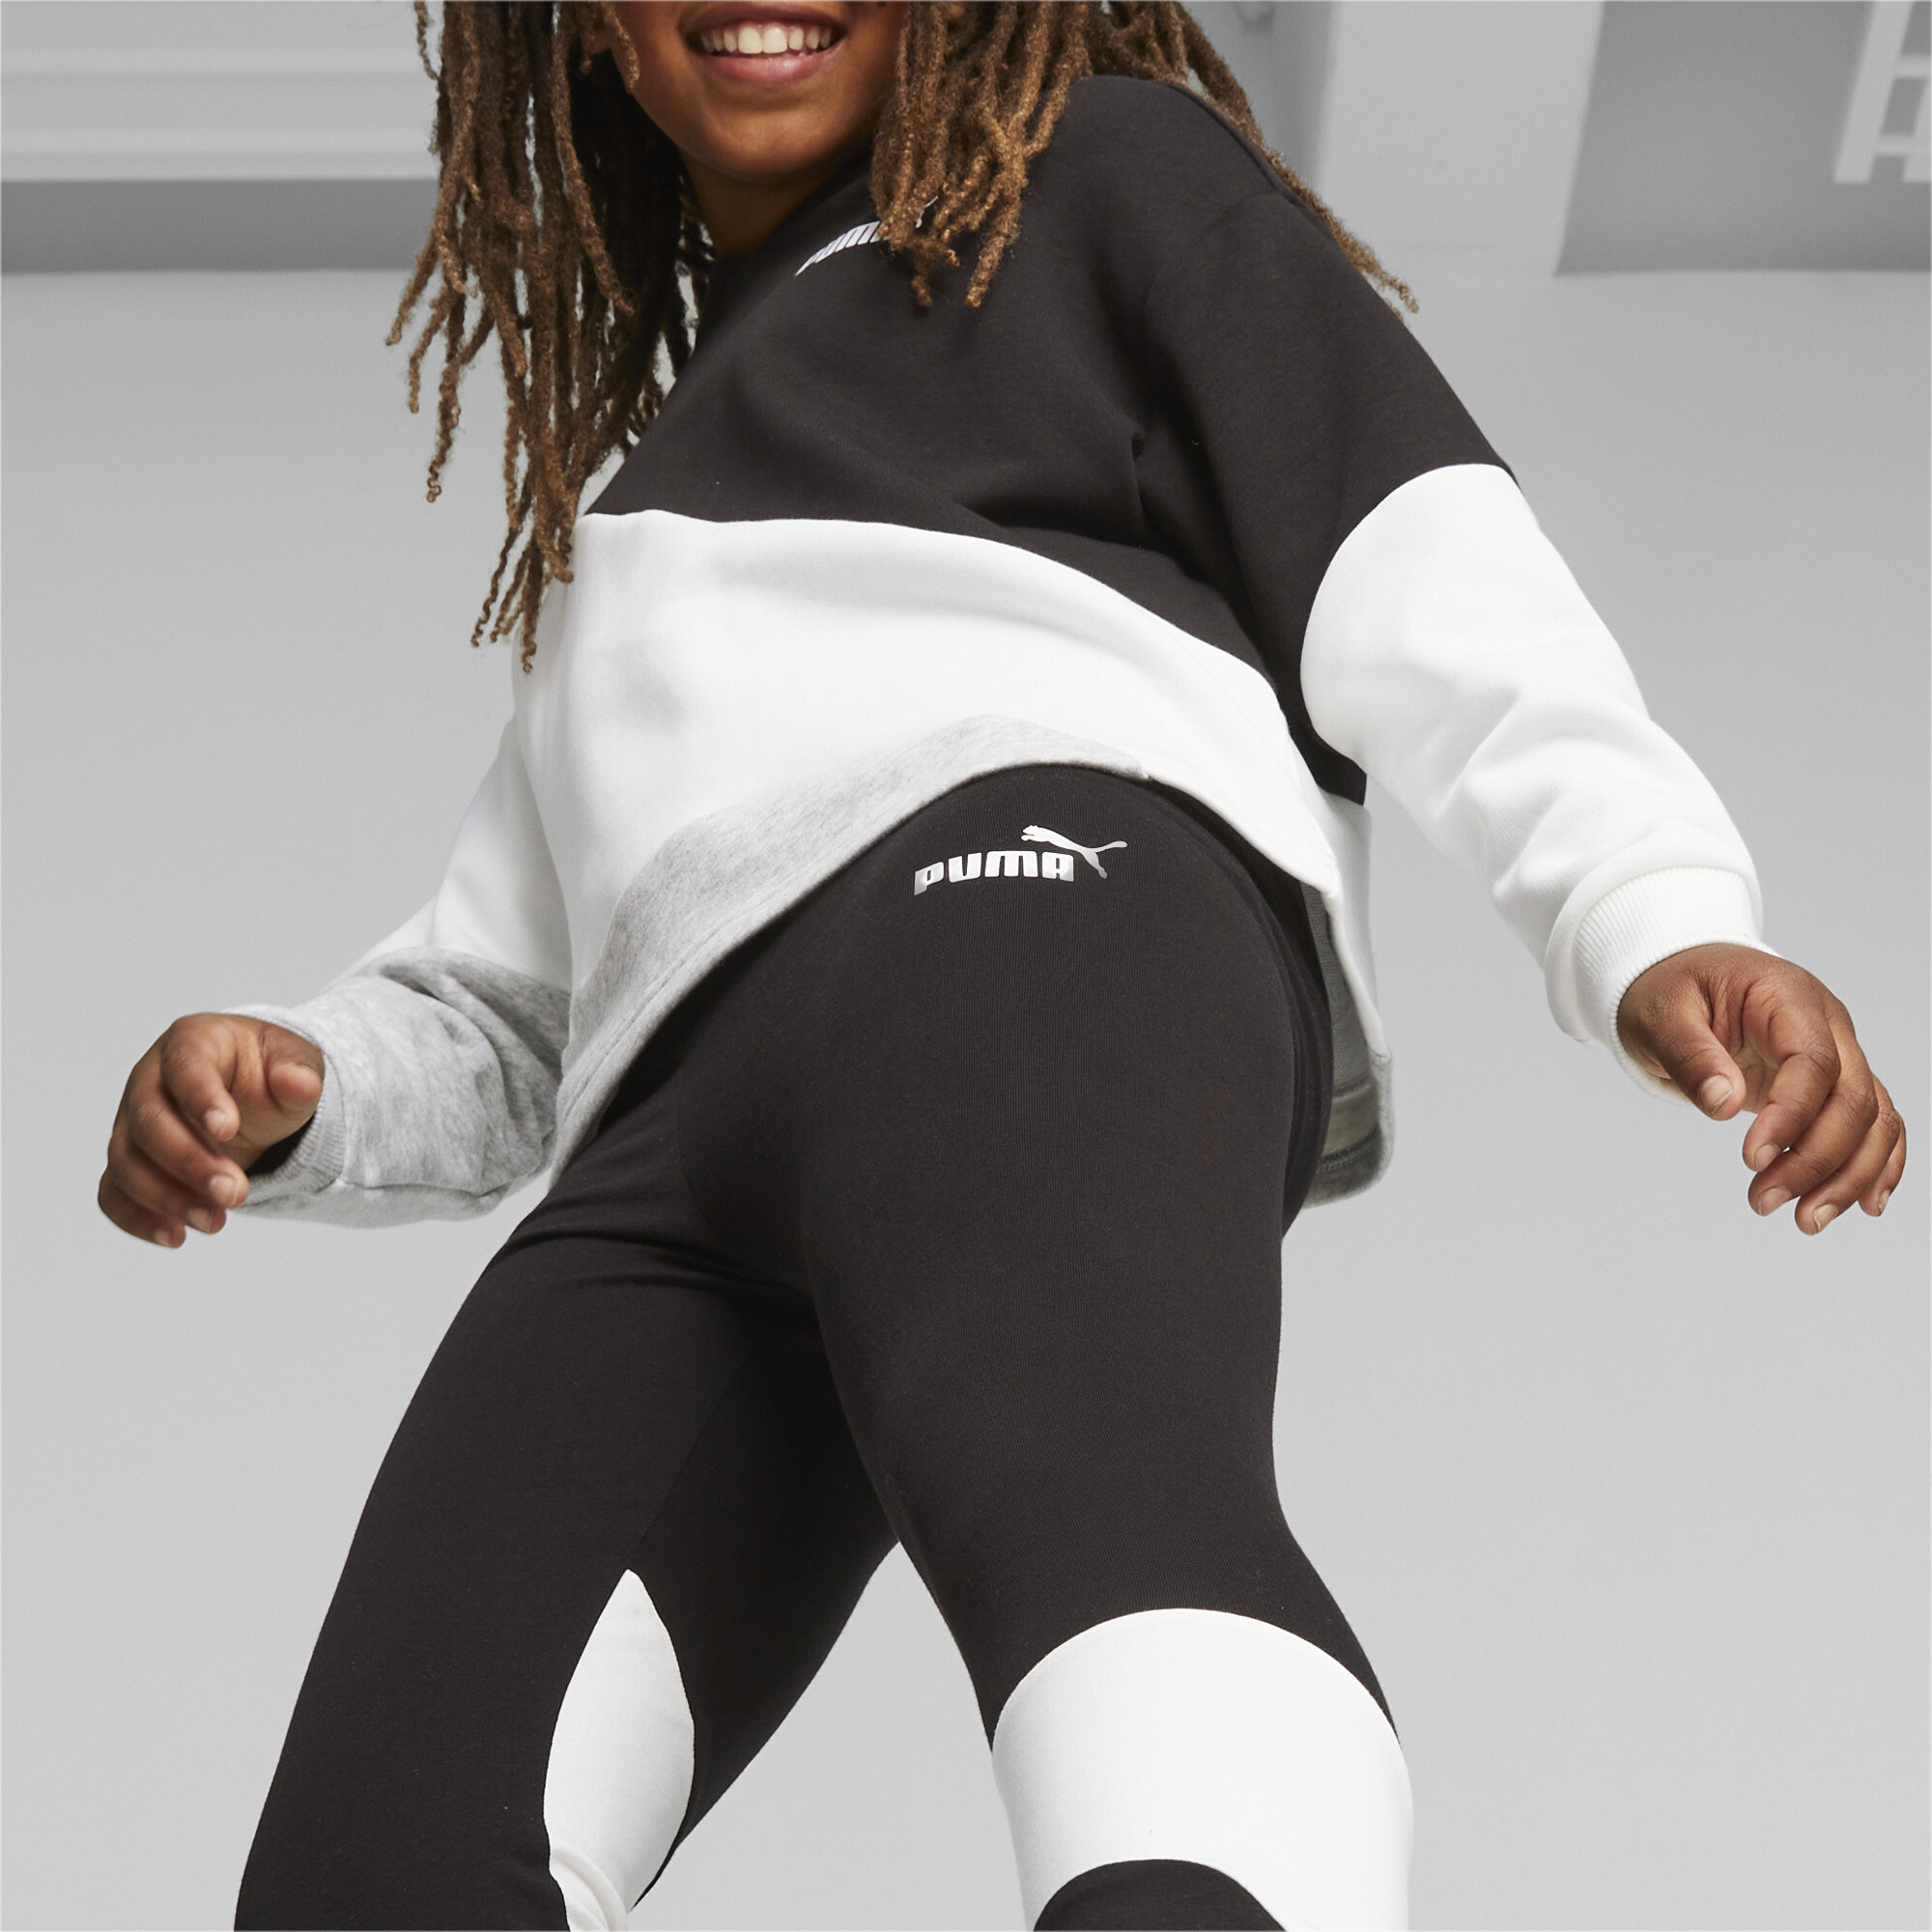 Women's Puma POWER Youth Leggings, Black, Size 15-16Y, Clothing